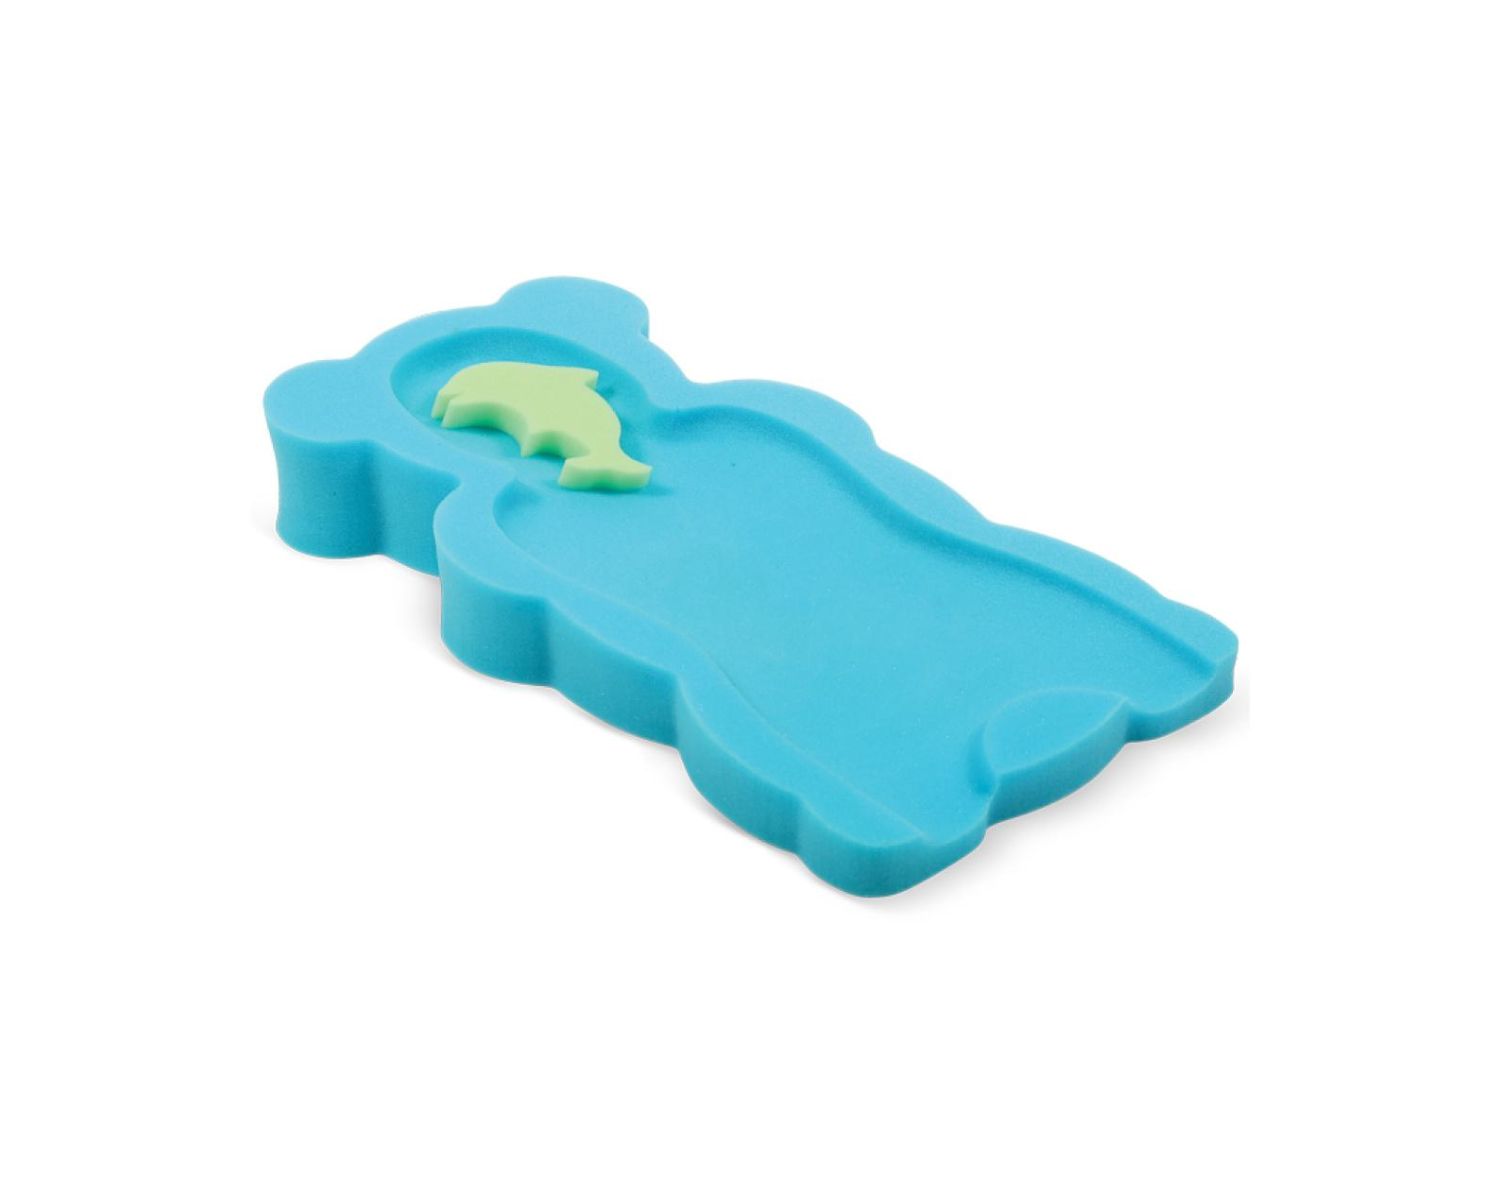 Review: Baby Bath Sponge Cushion – The Perfect Bath Time Companion